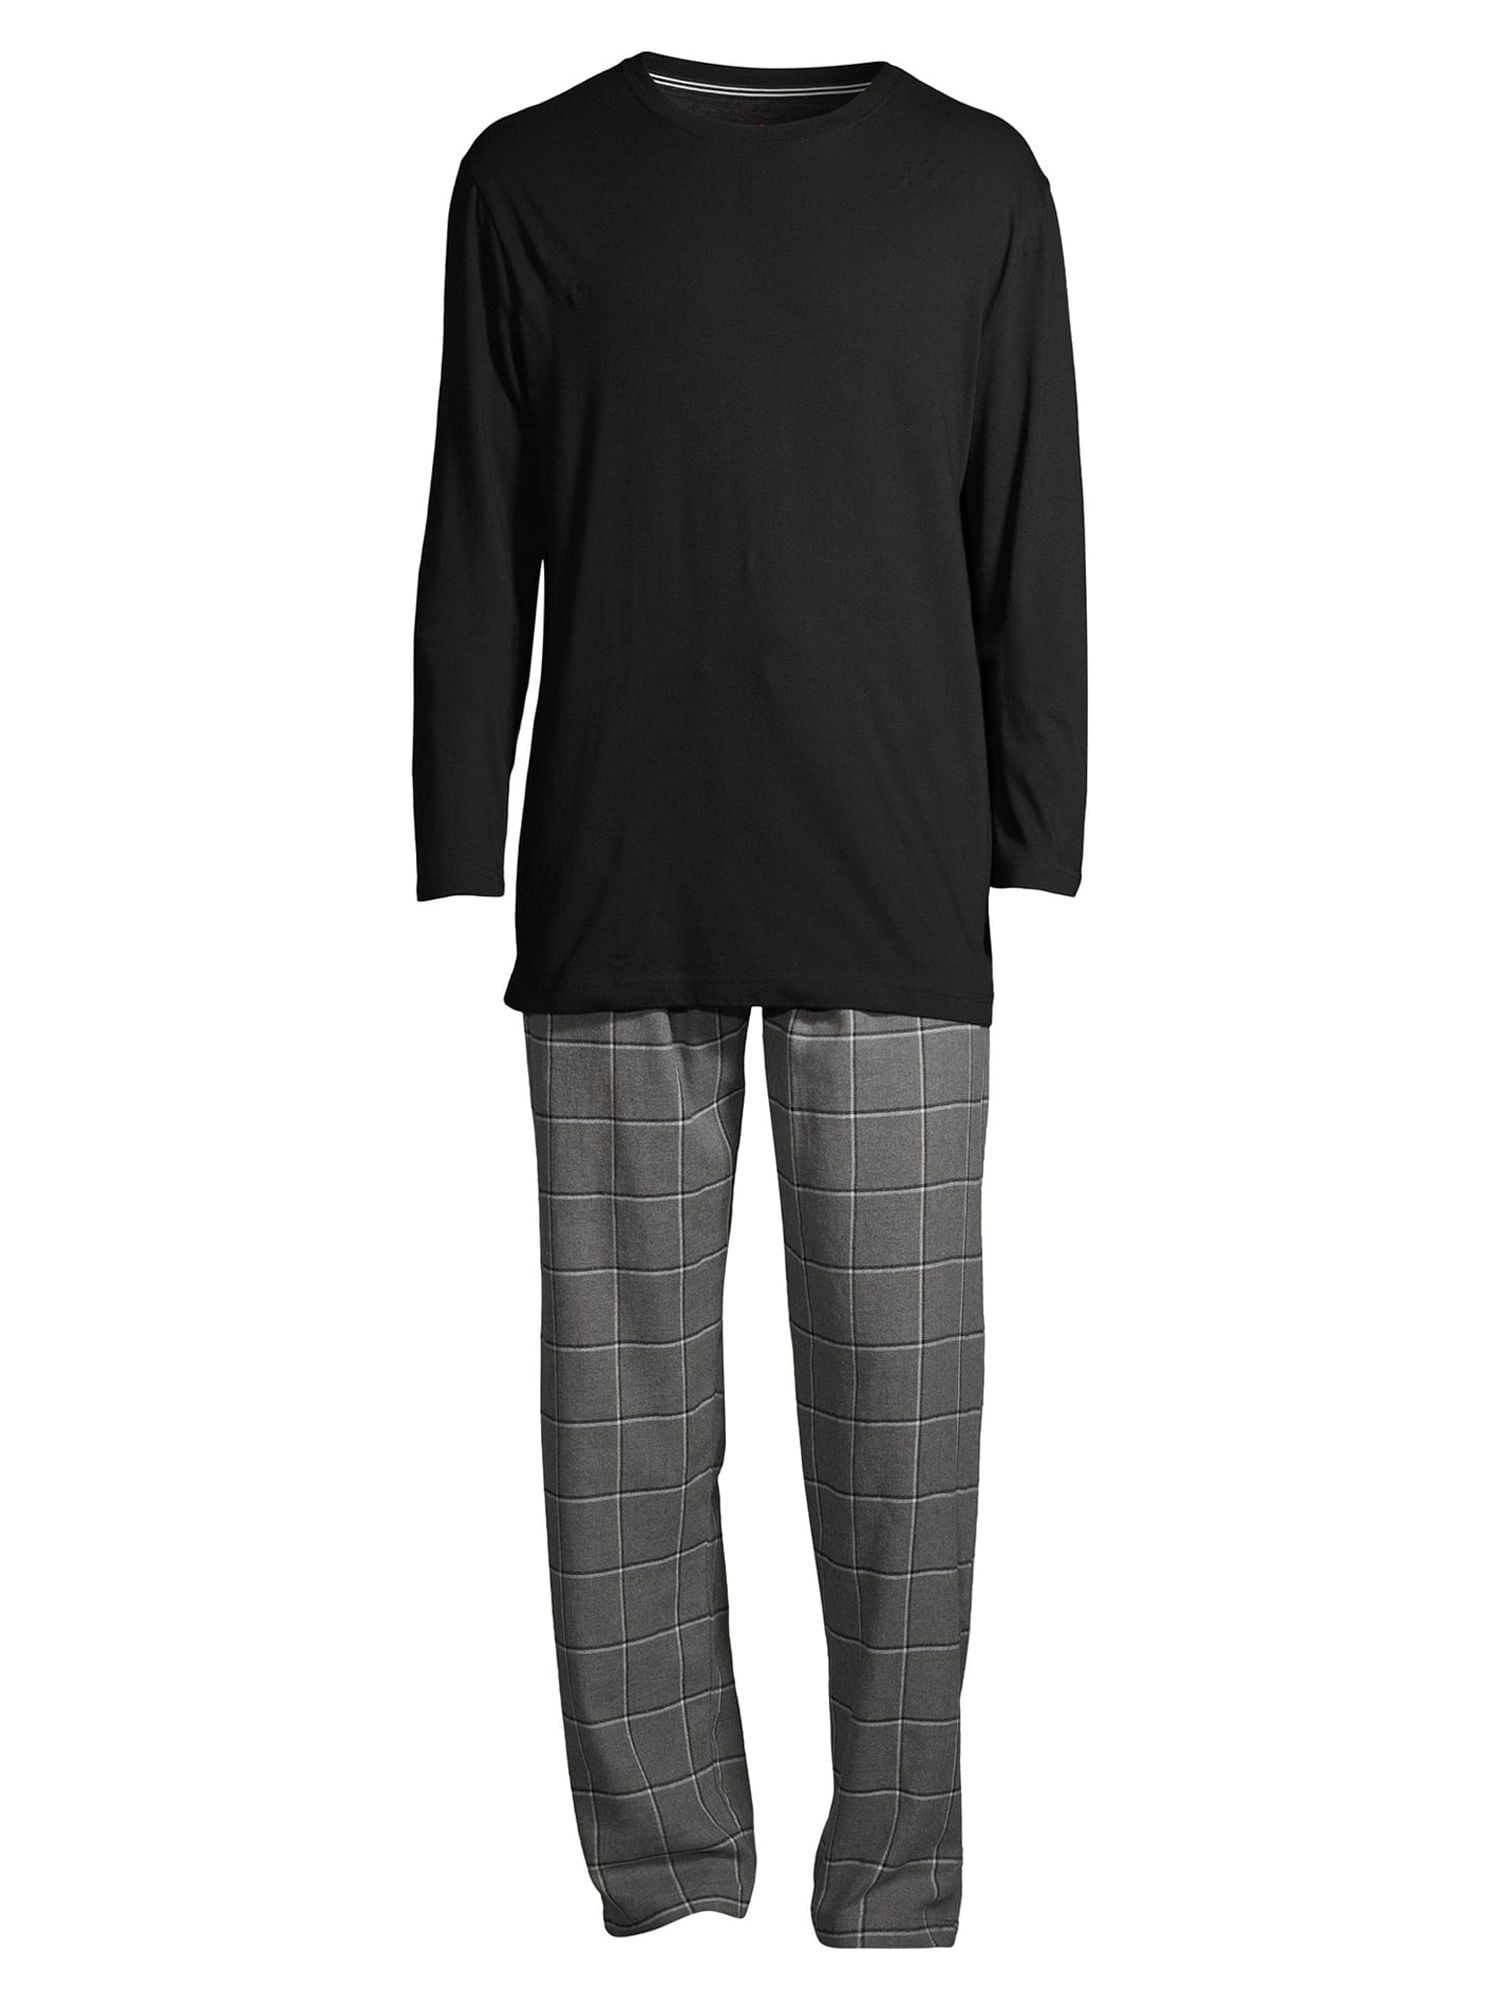 New! Hanes Men's & Big Men's Ultrasoft Flannel Pajama Set, 2-Piece